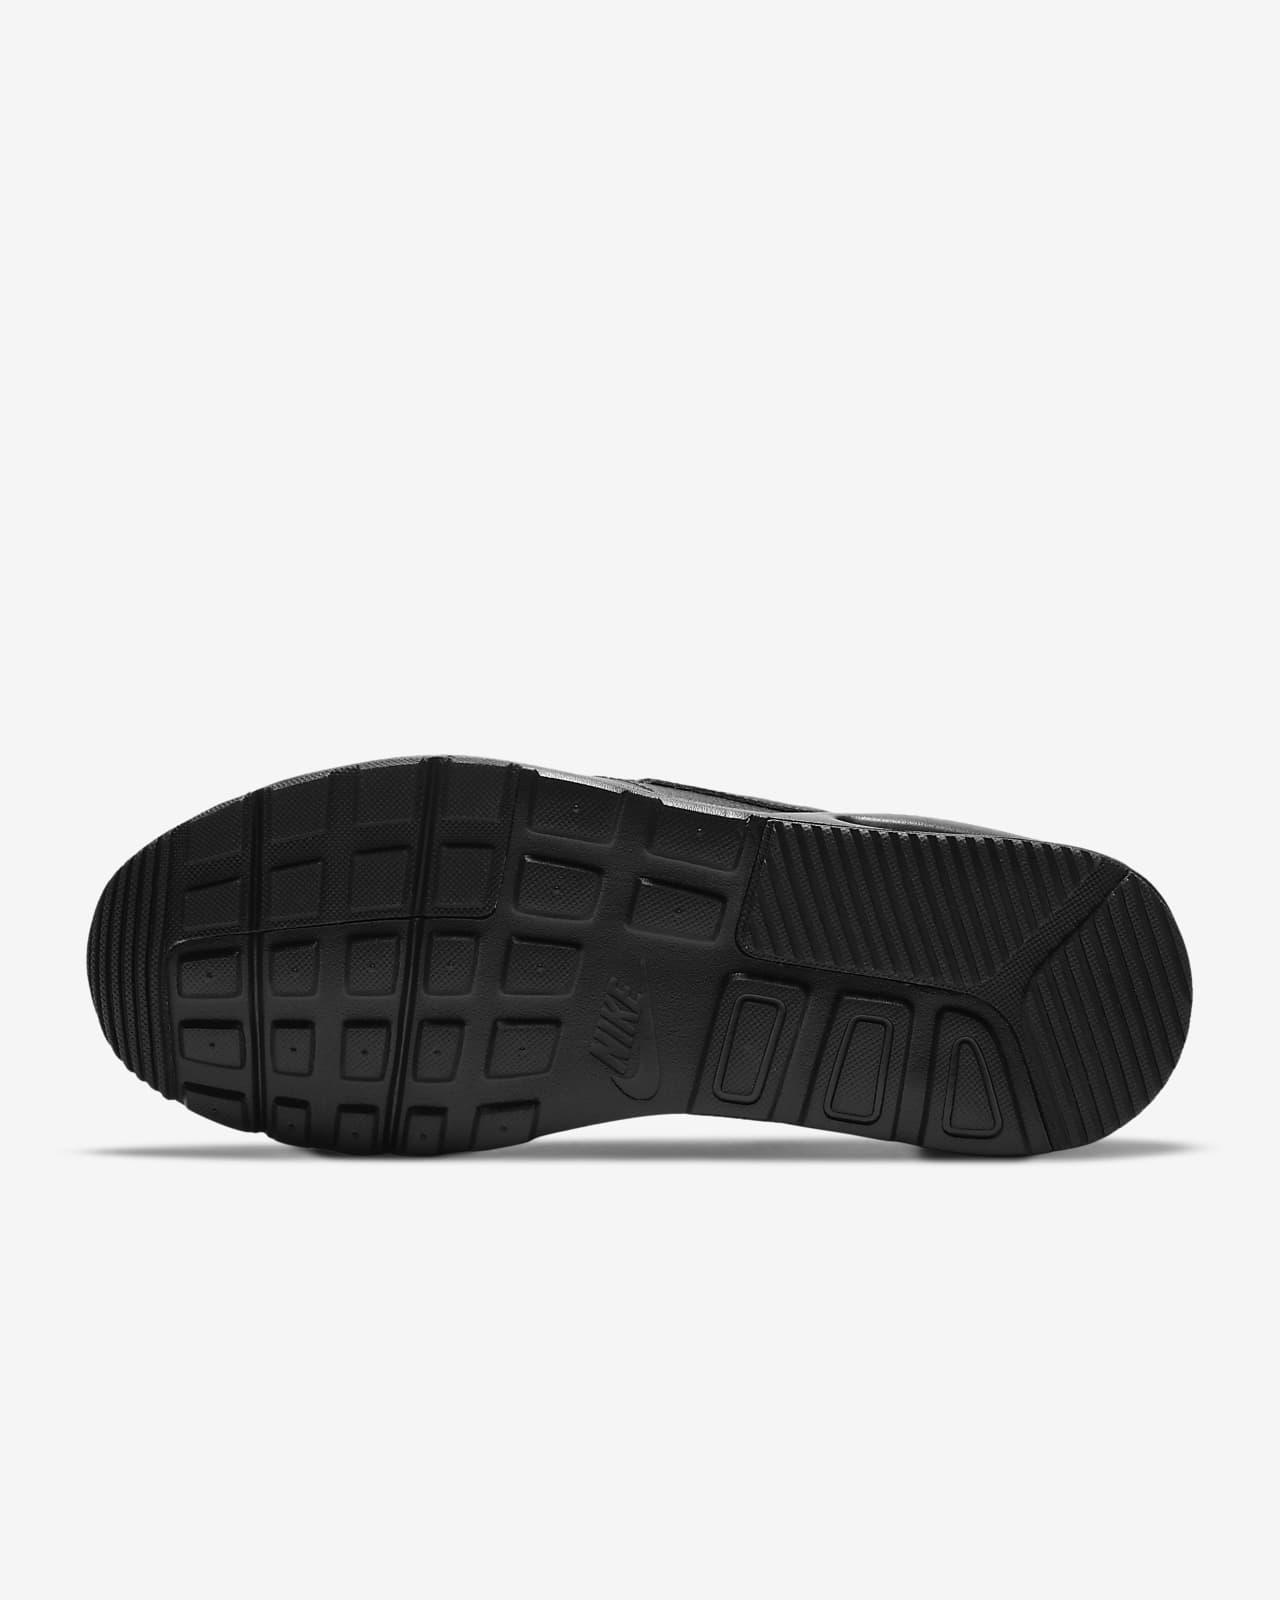 Zapatillas Running para Hombre Nike CW4555 110 Air Max Sc Blanco-8.5 US I  Oechsle - Oechsle